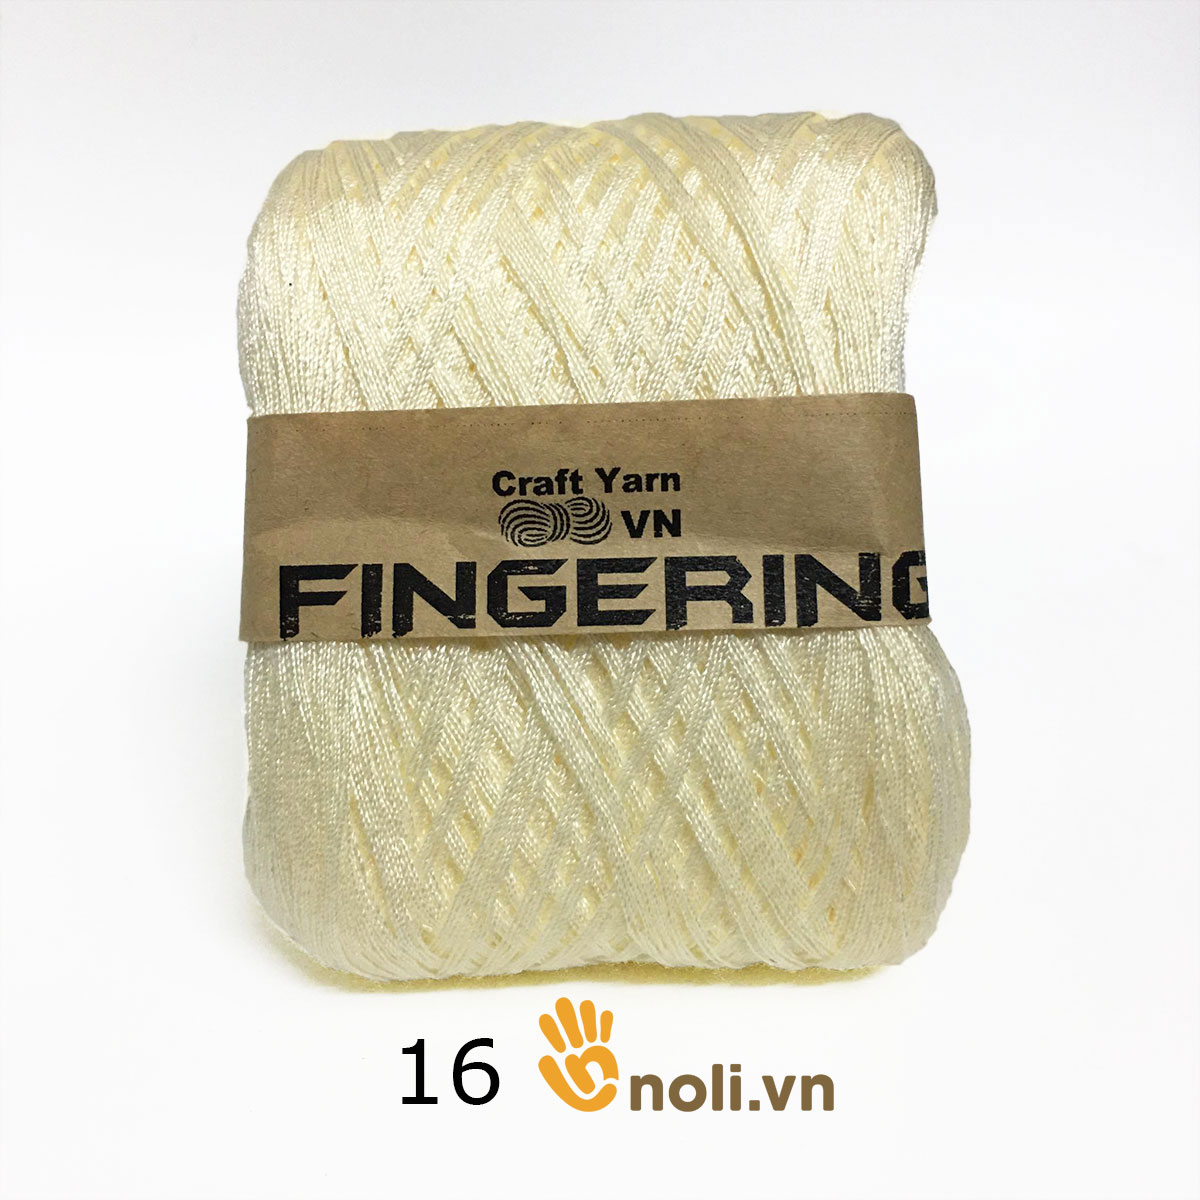 Shiny Fingering cotton yarn